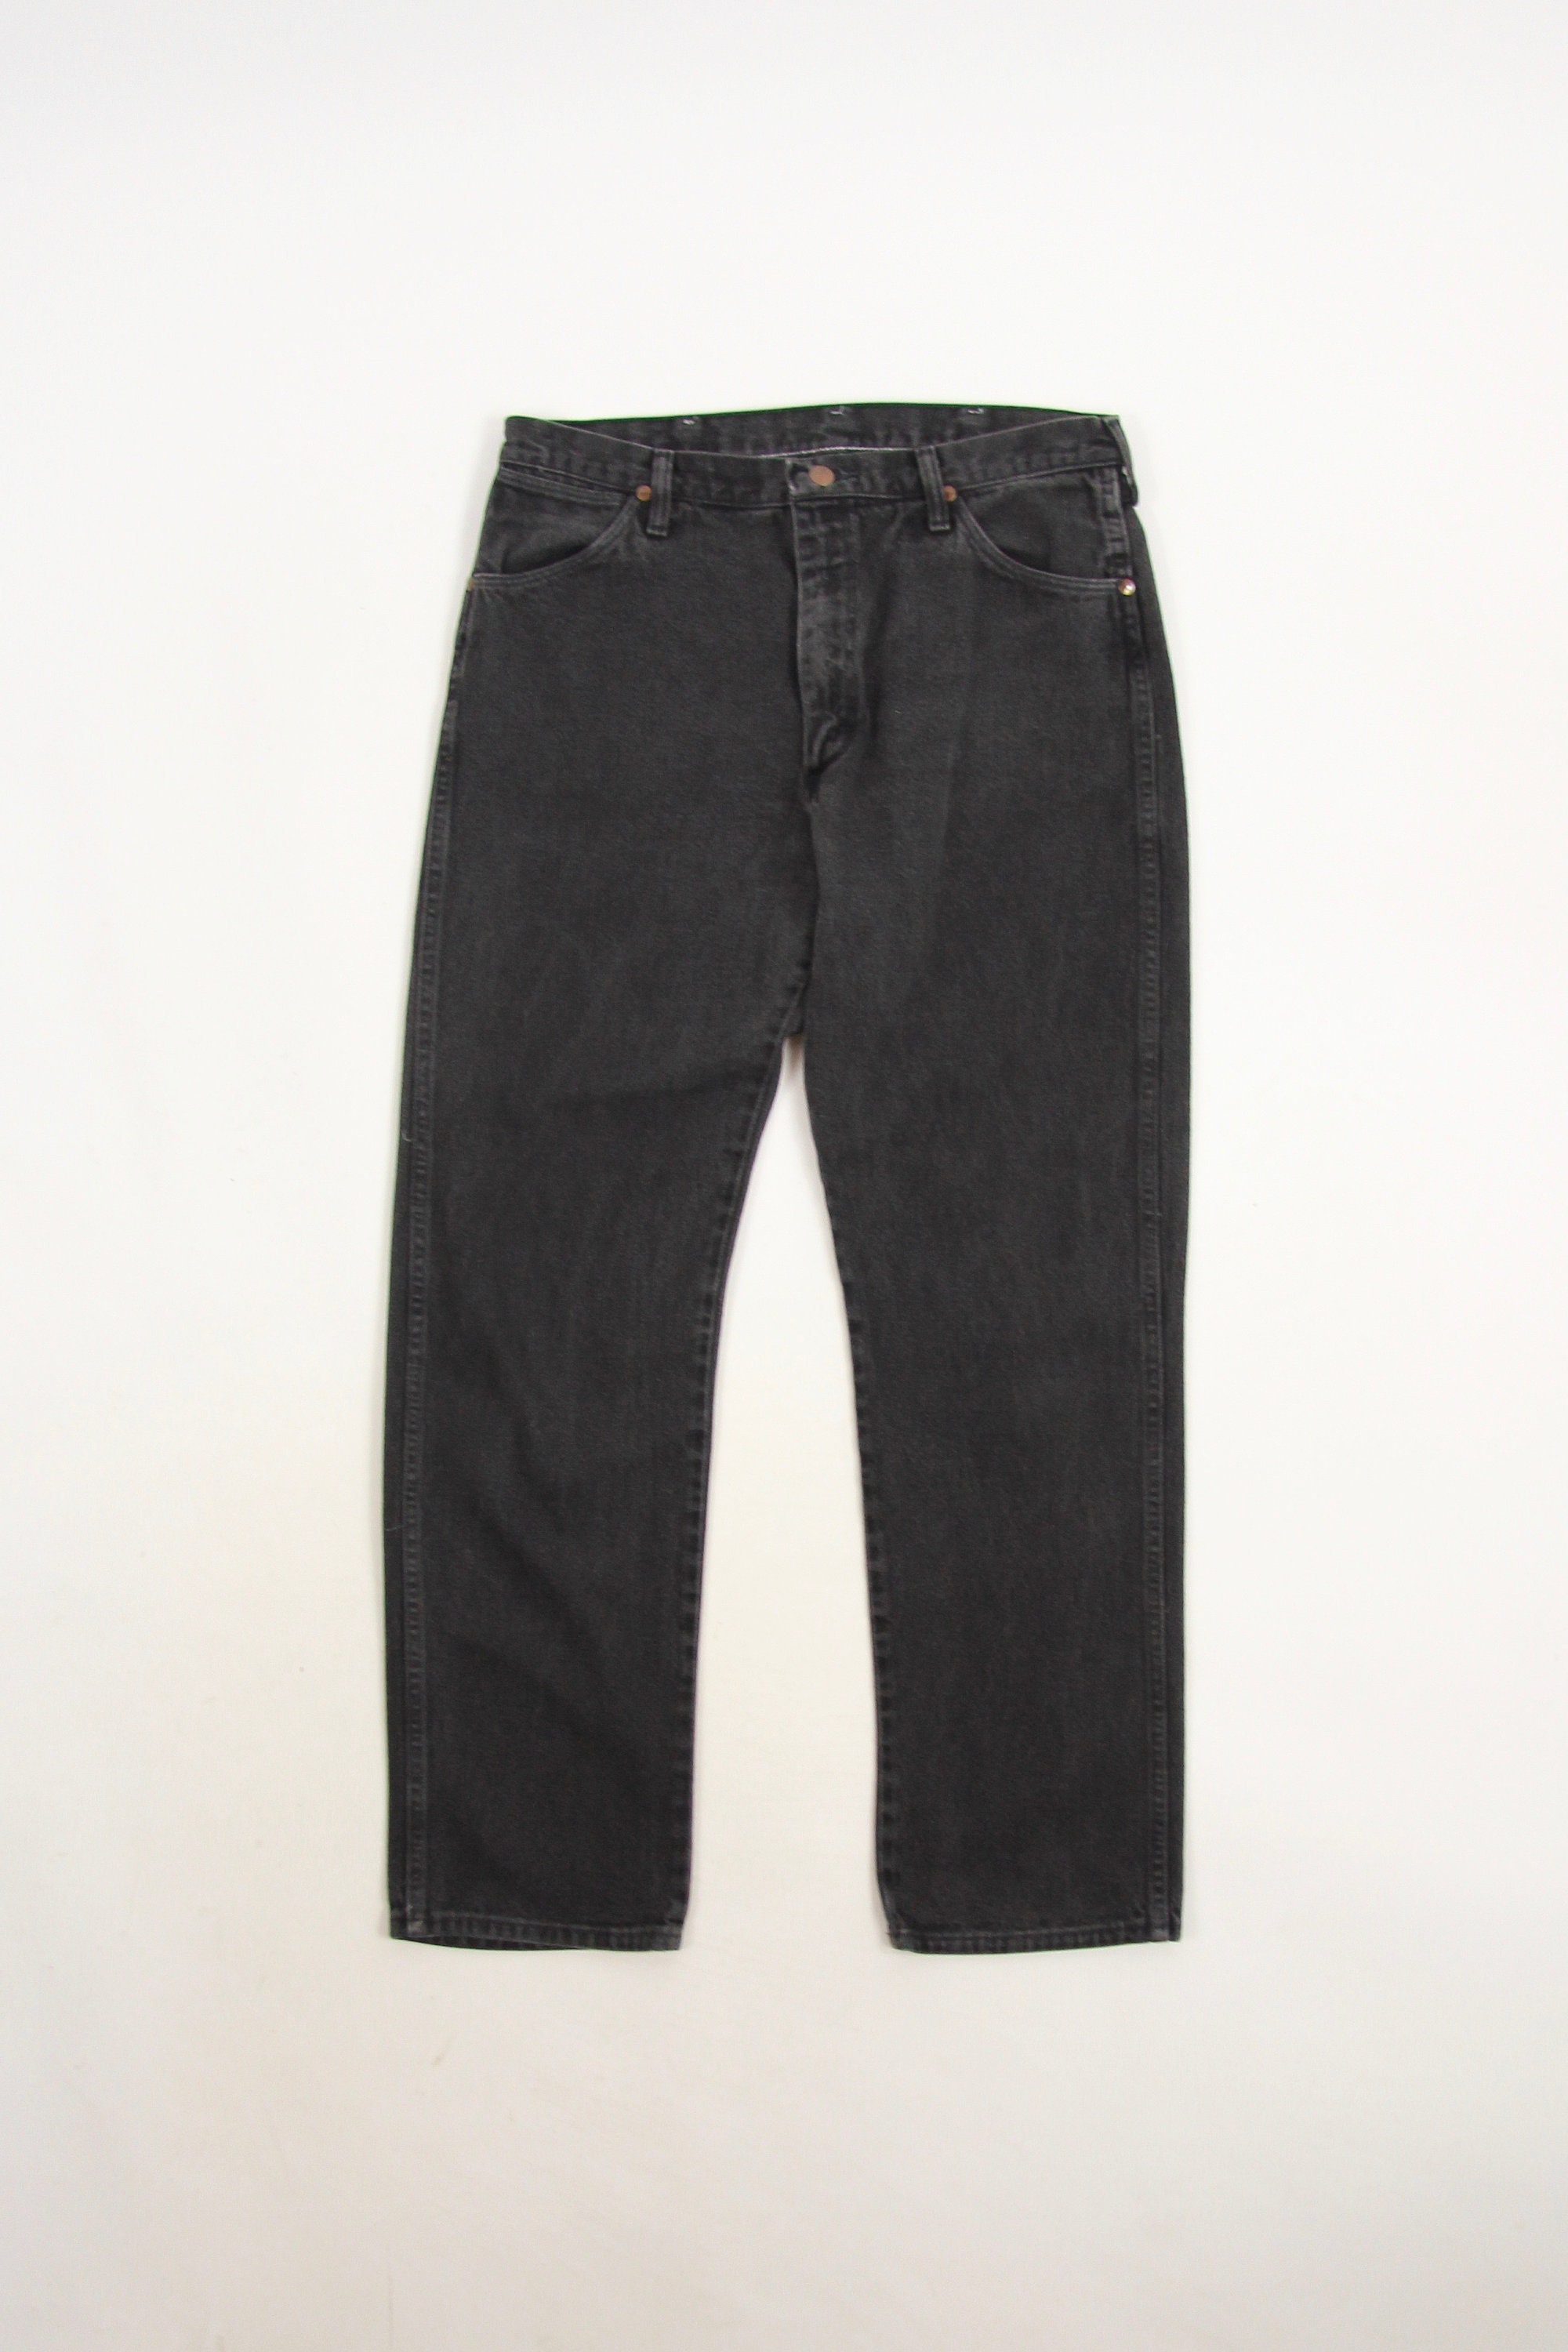 Wrangler Black Jeans Vintage Denim Pants Made the USA Size 35 x 32